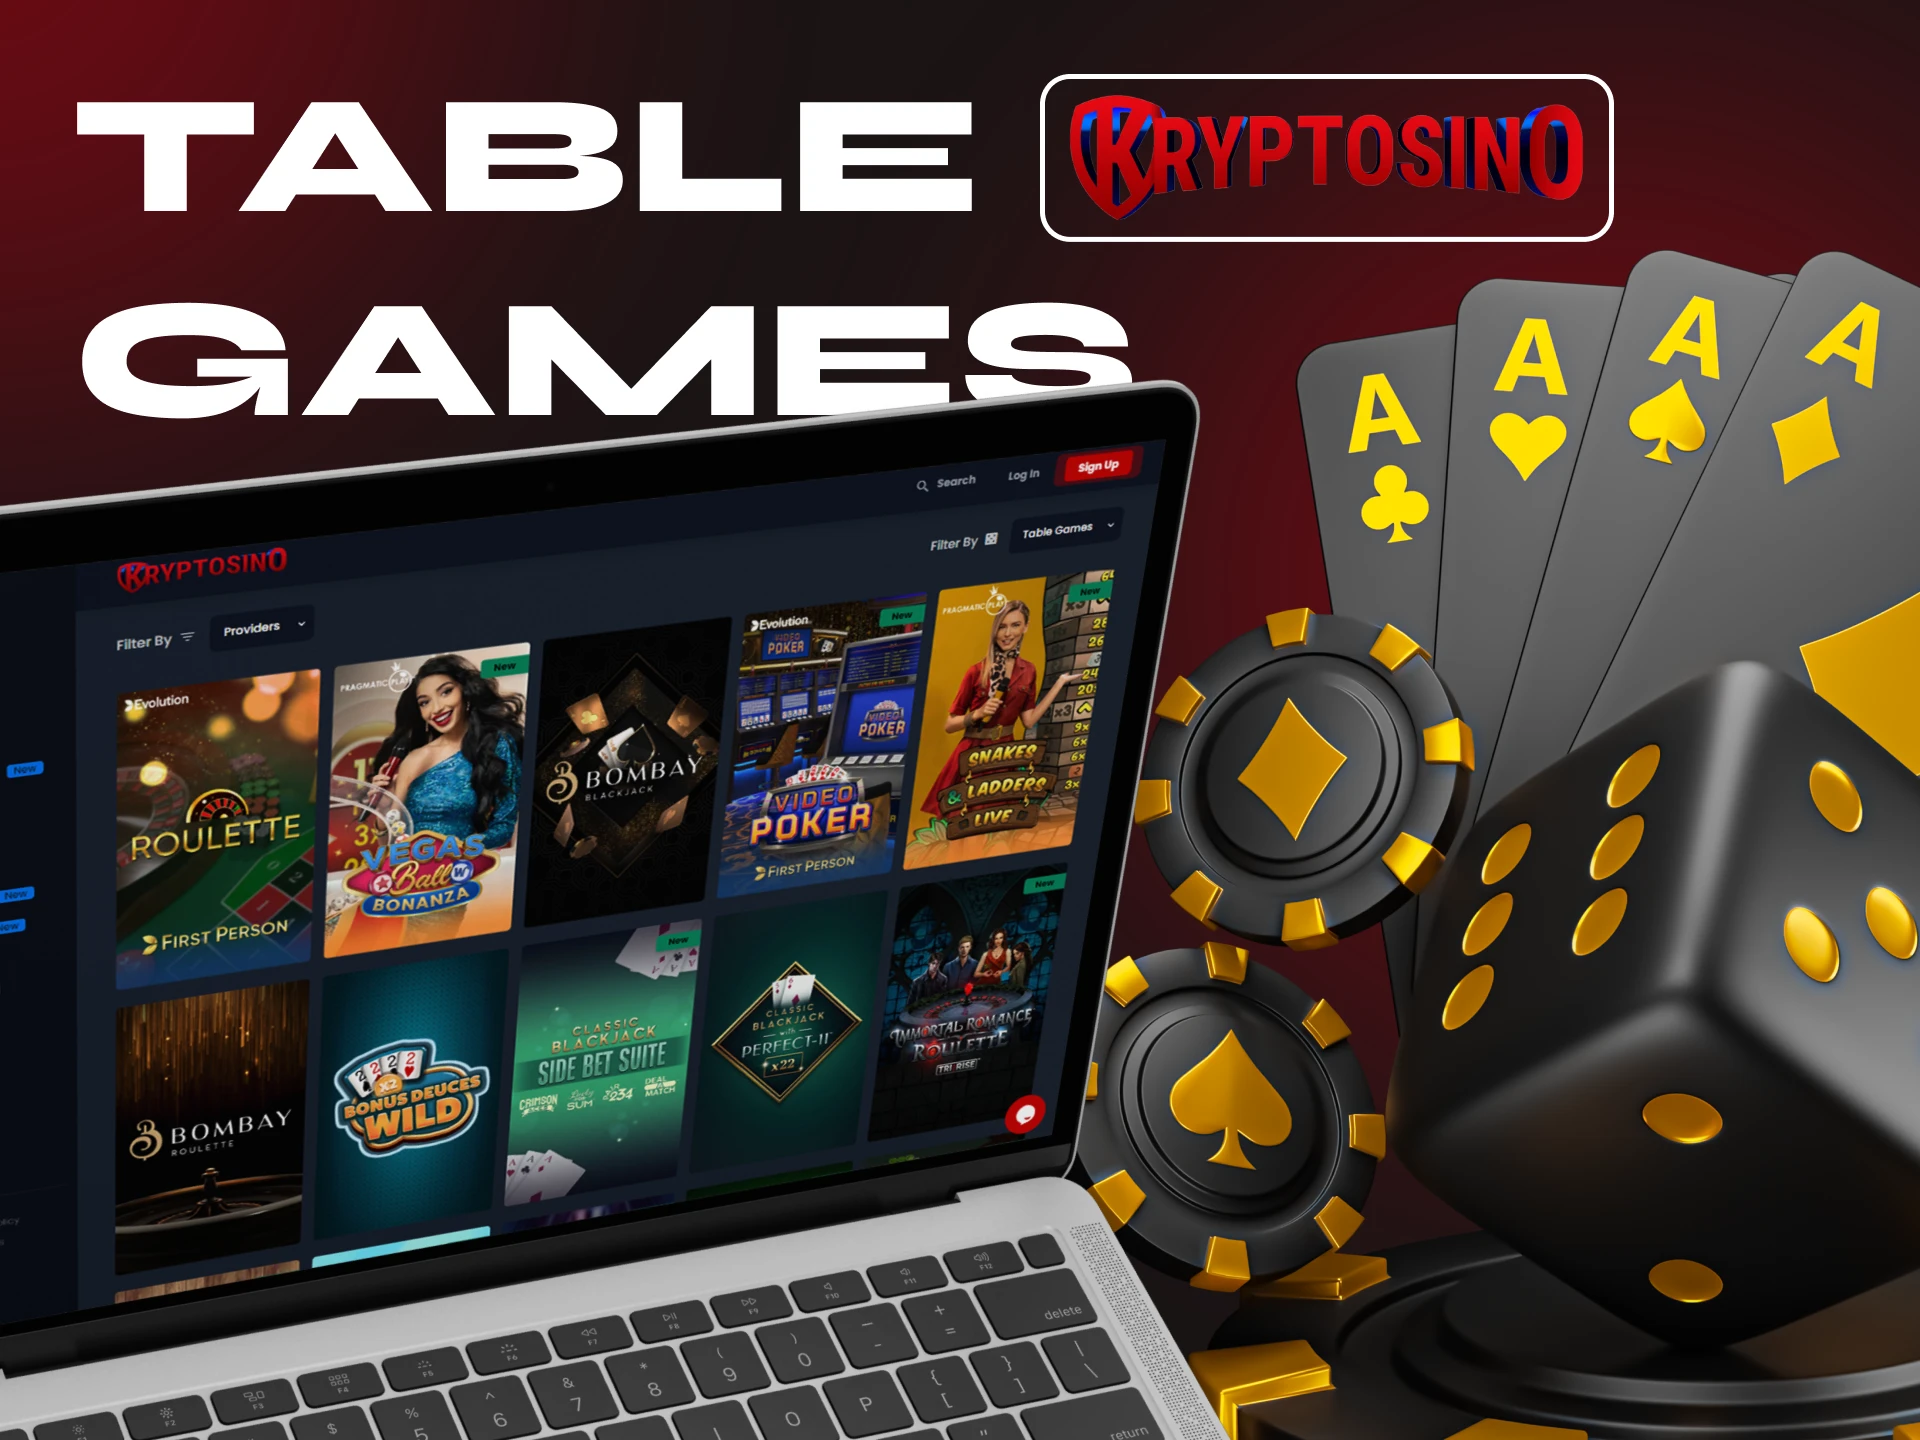 Play your favourite table games at Cryptosino crypto casino.